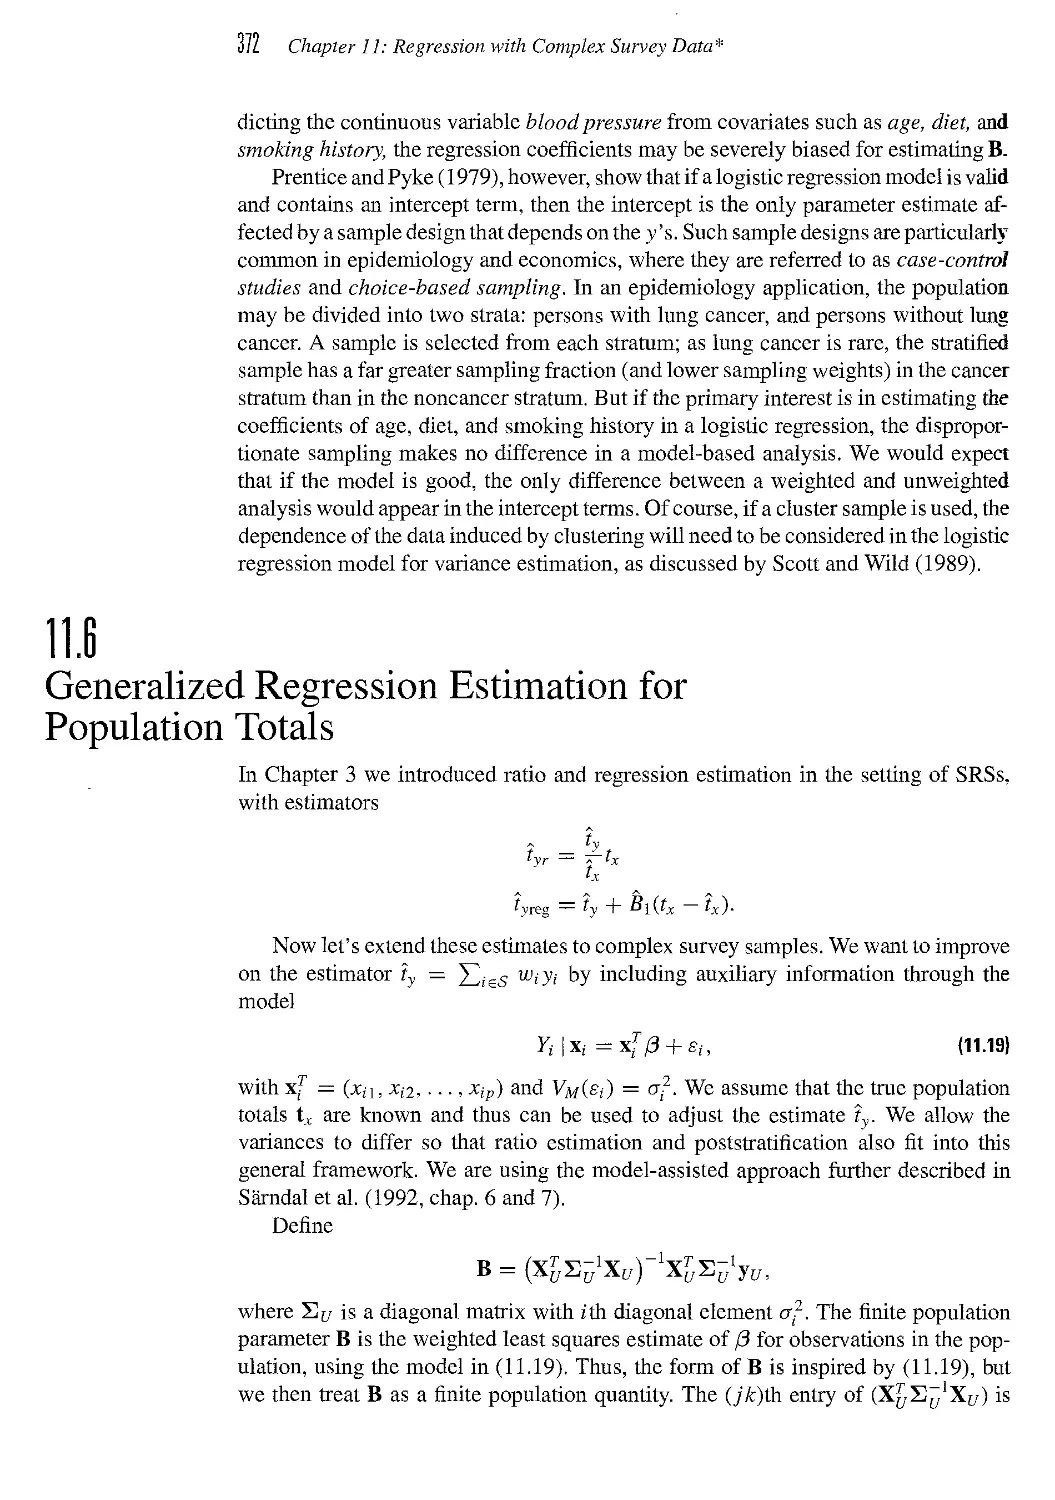 11.6 Generalized Regression Estimation for Population Totals